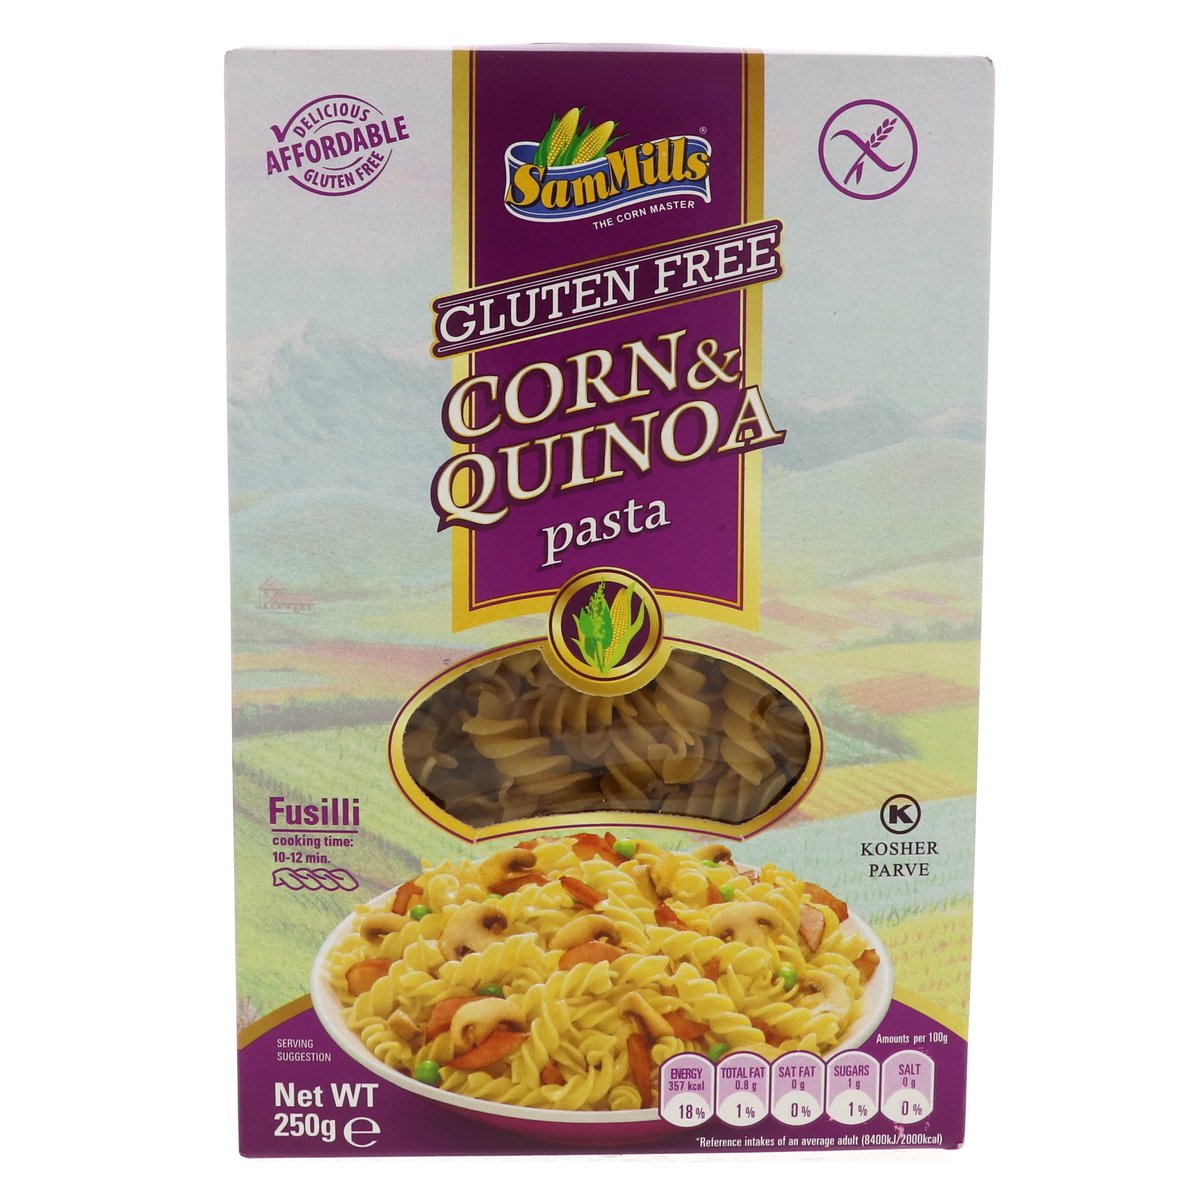 Sam Mills Corn & Quinoa Fusilli Pasta Gluten Free 250g